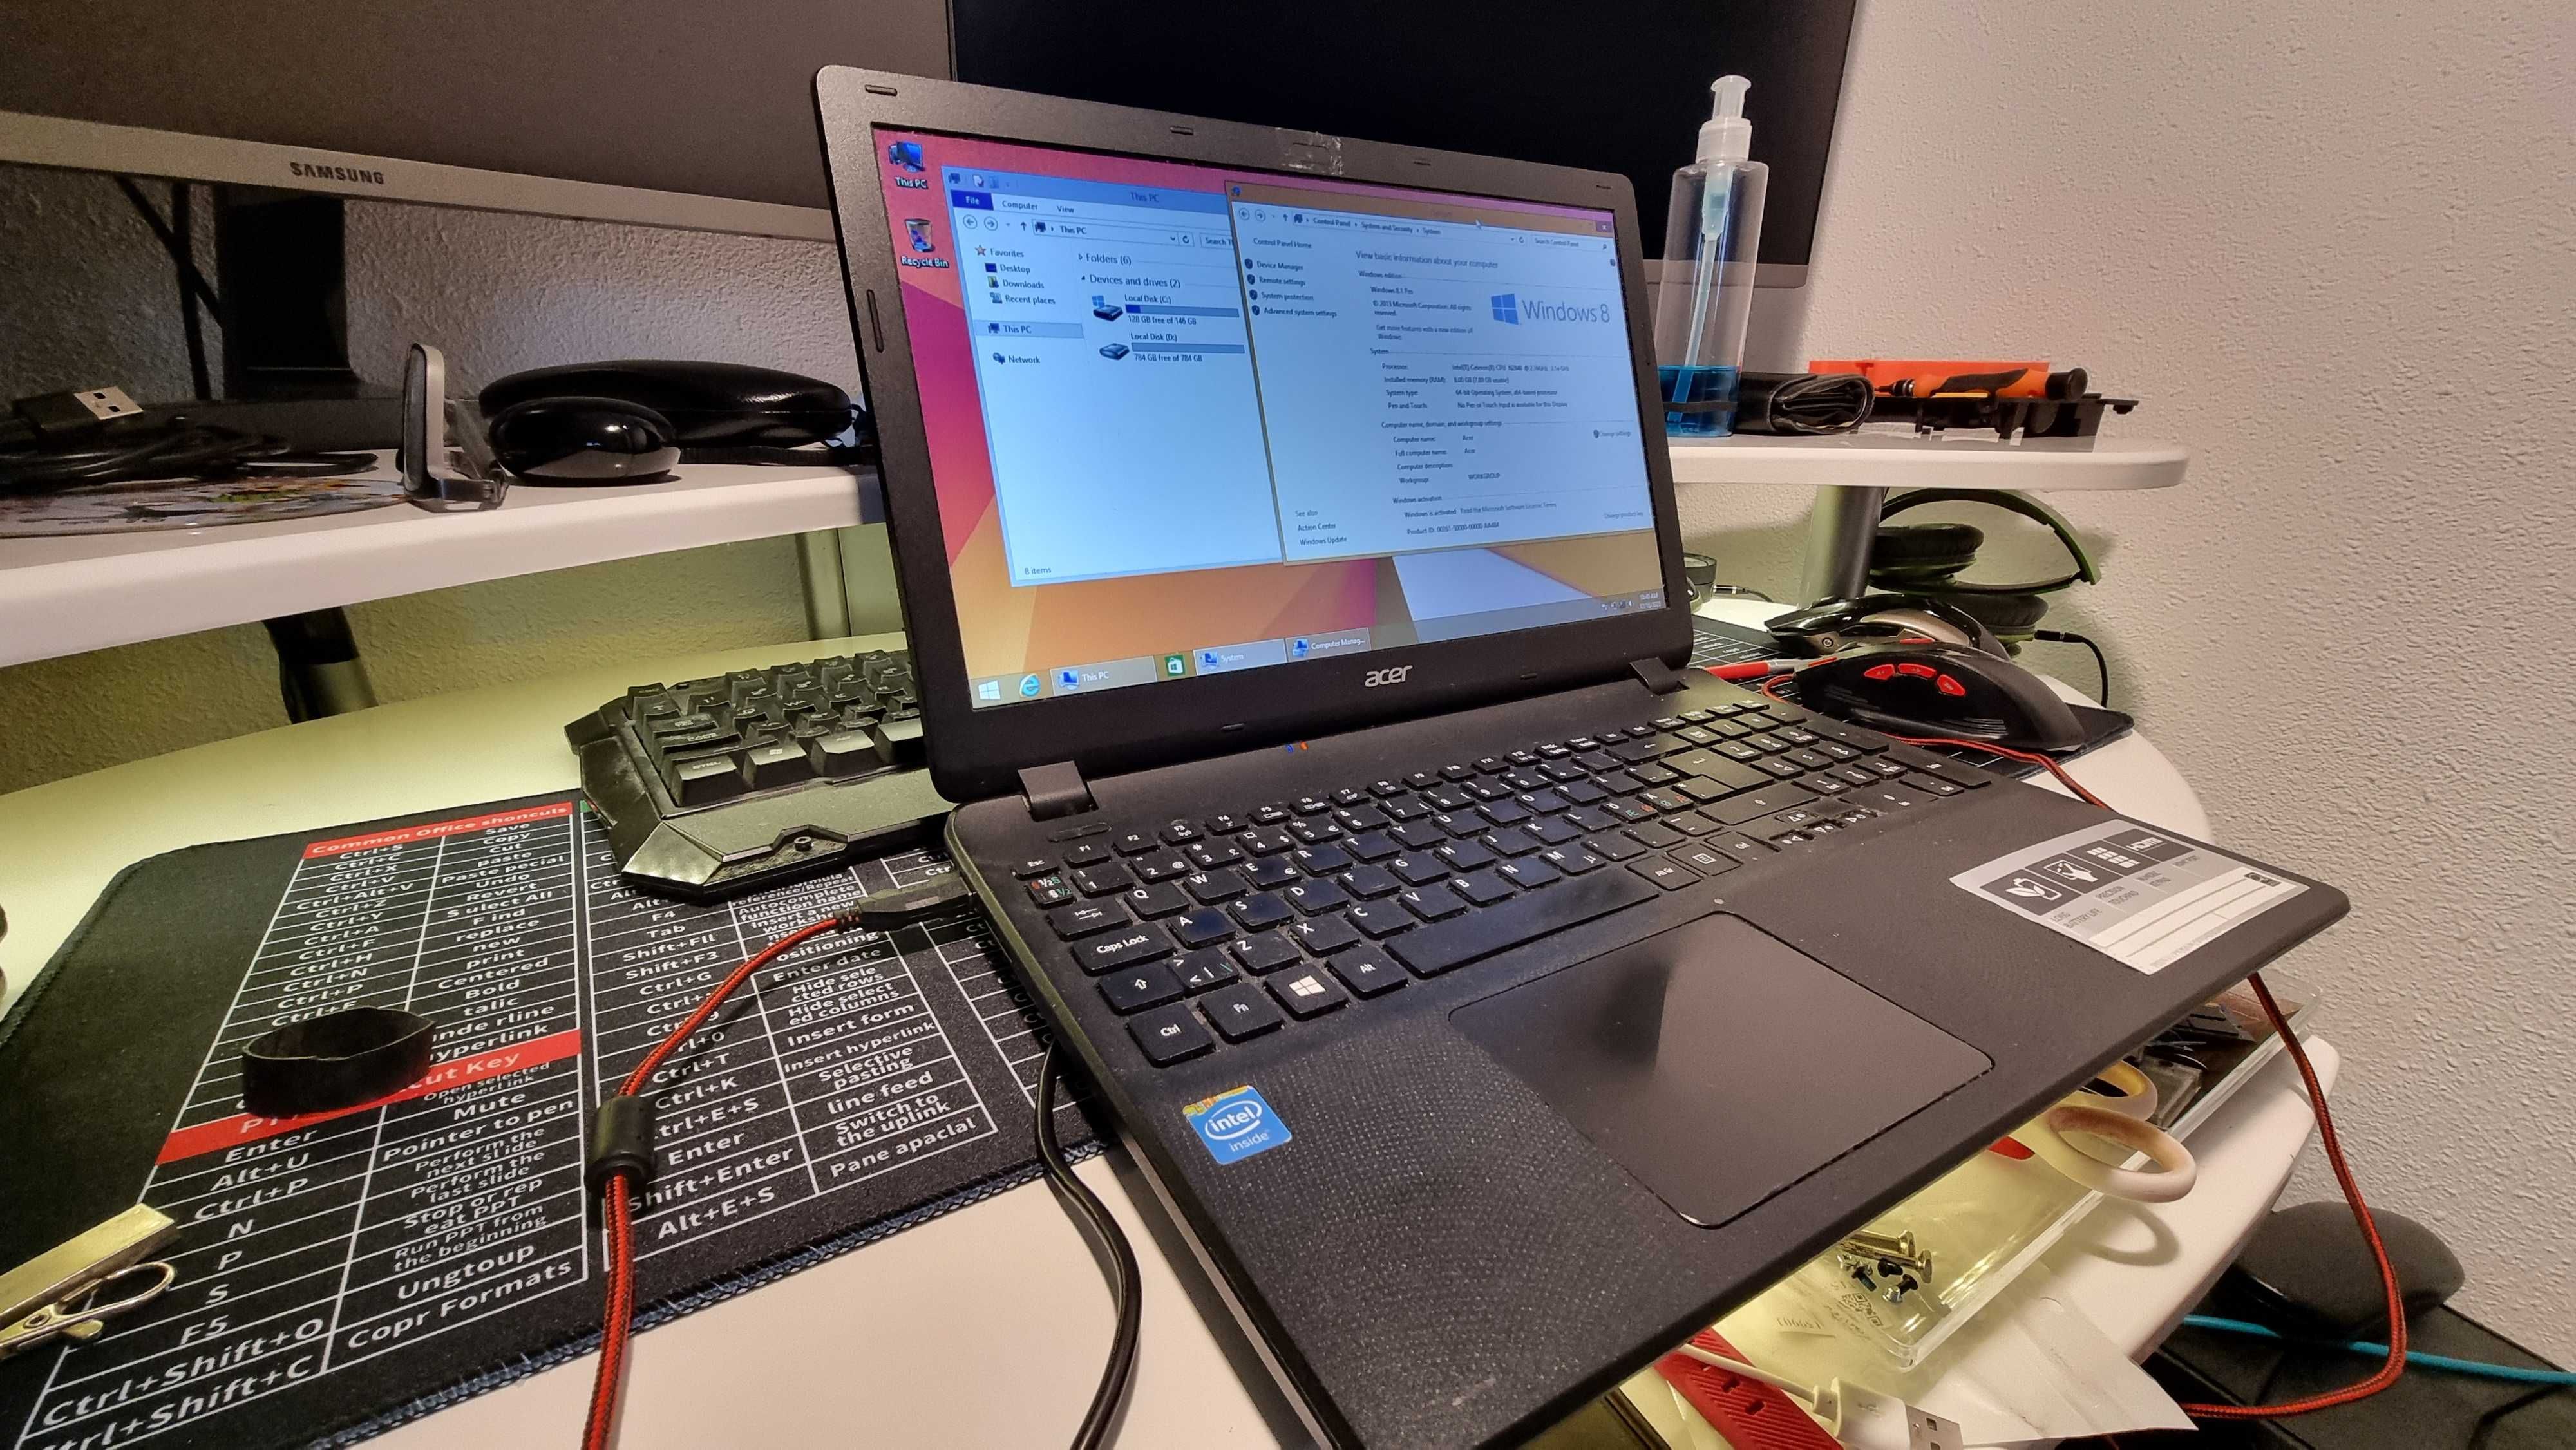 Laptop Acer Aspire ES1-512